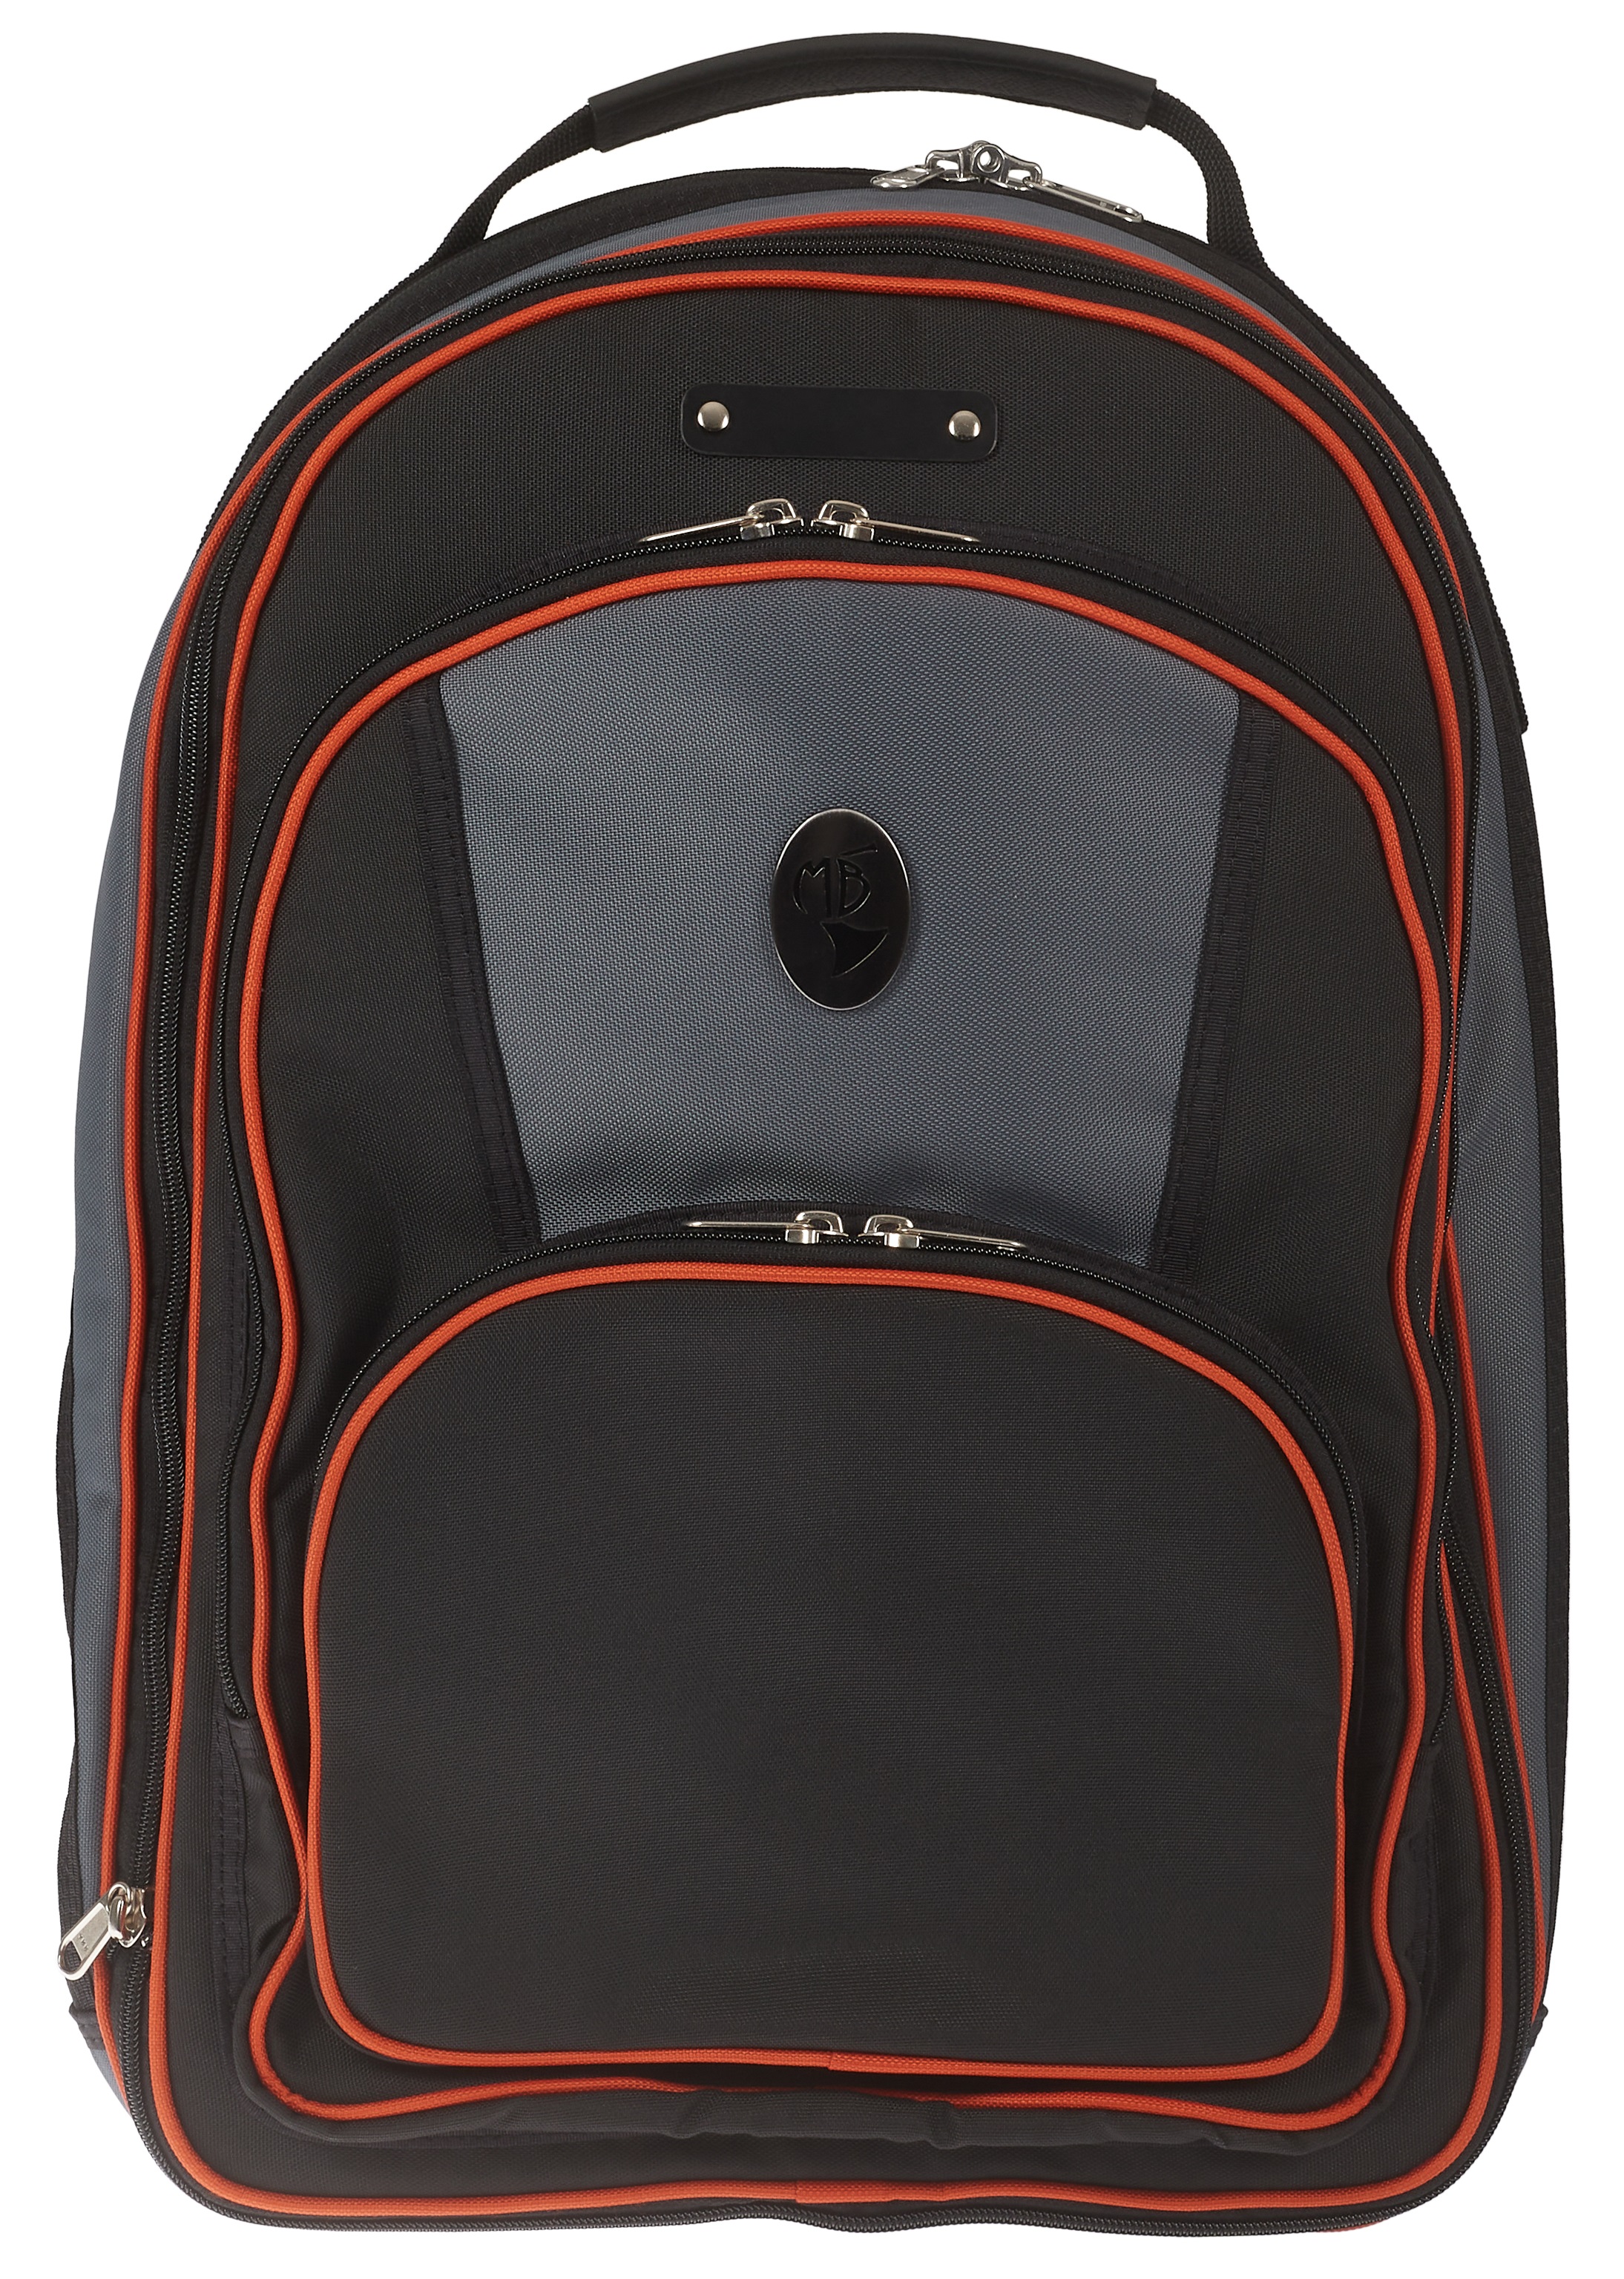 Marcus Bonna MB Backpack Bag, Black/Grey Nylon, Orange Piping, Bell Pr